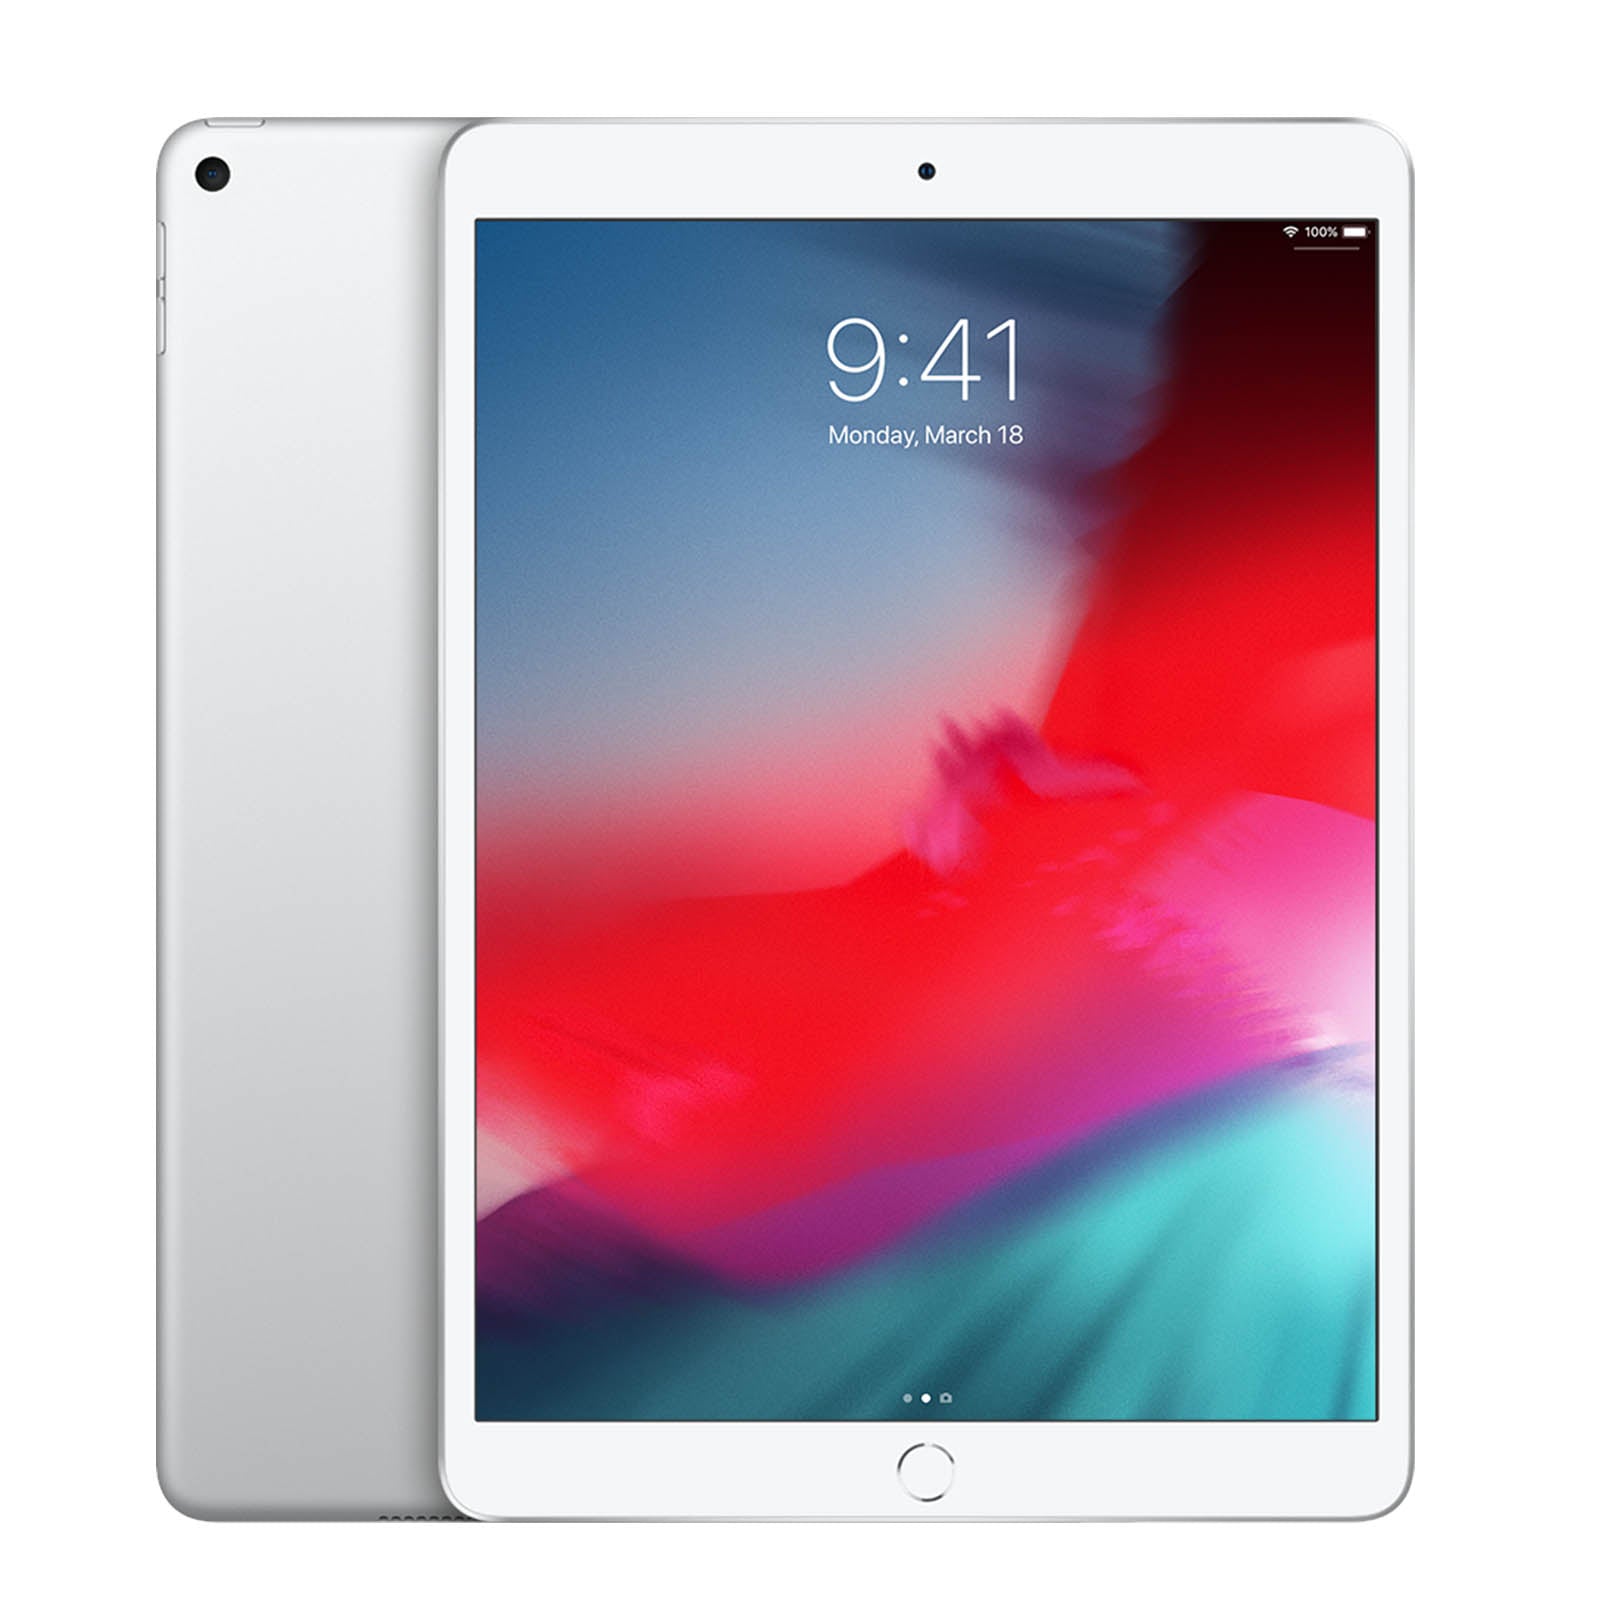 Apple iPad Air 3 256GB WiFi - Silver - Very Good 256GB Silver Very Good